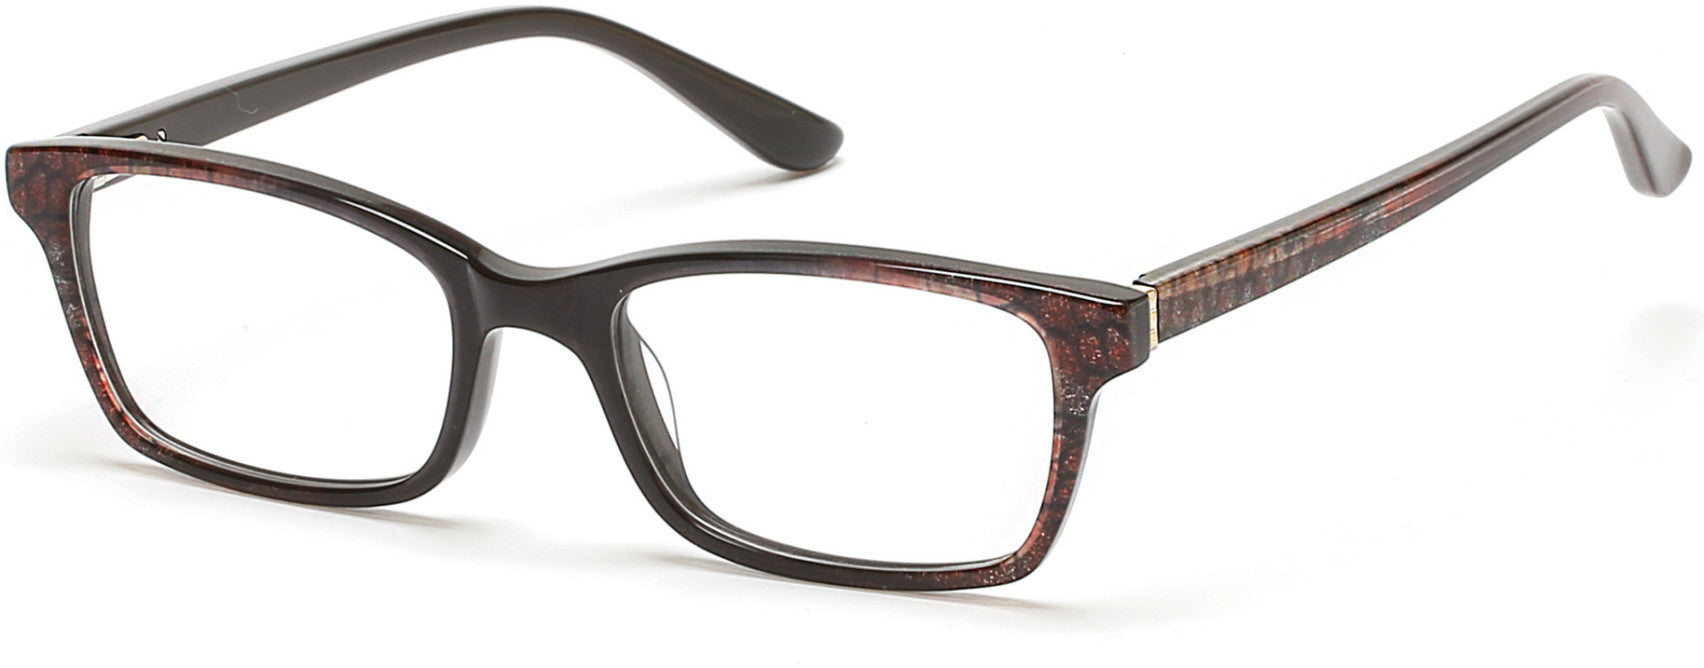 Marcolin MA5003 Eyeglasses 050-050 - Dark Brown